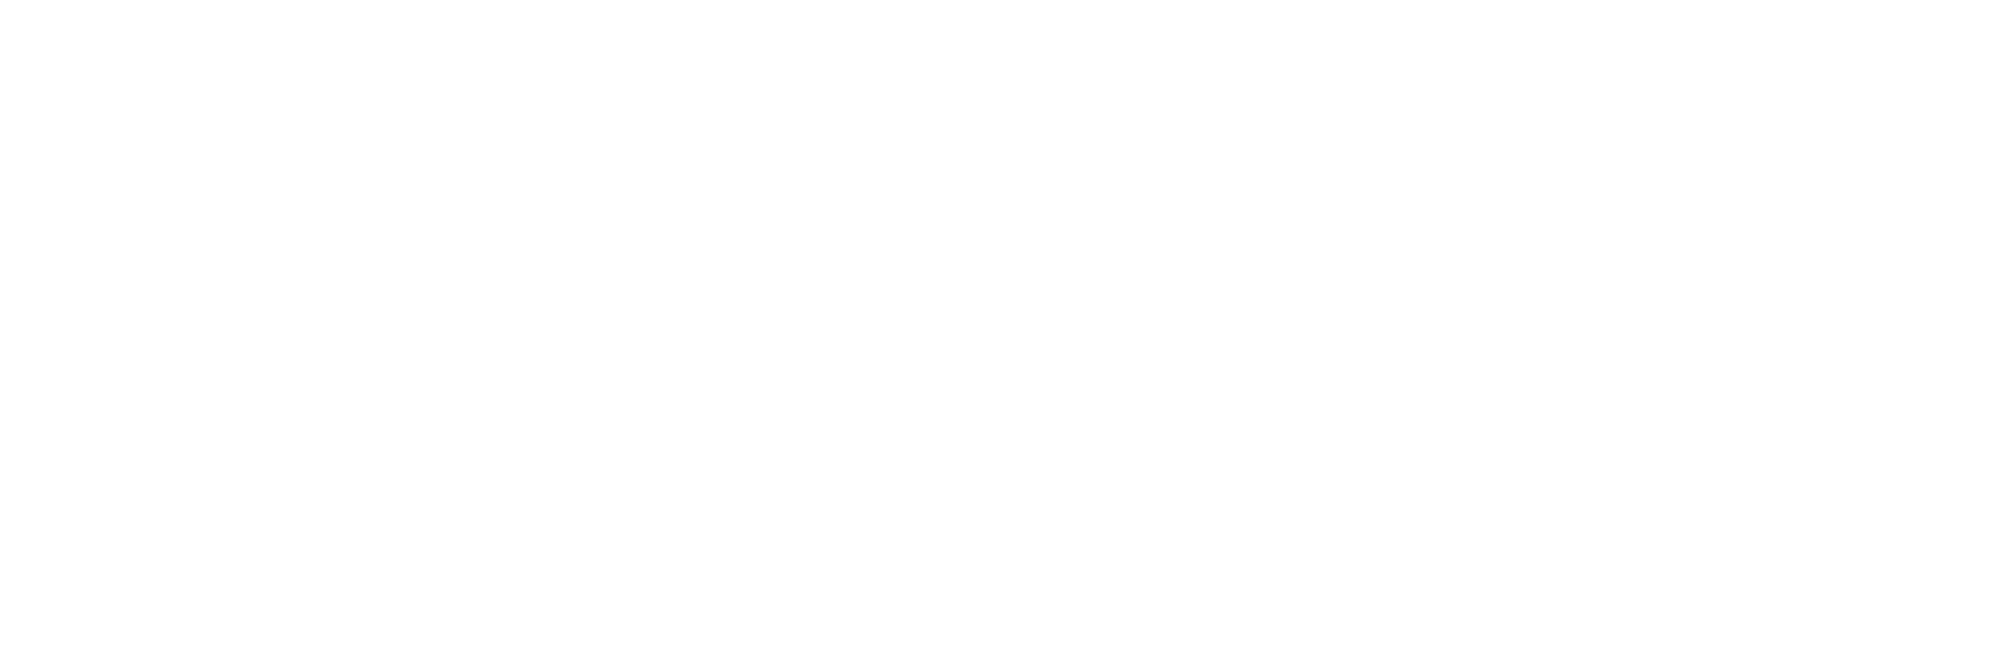 Revealio software and media solutions logo